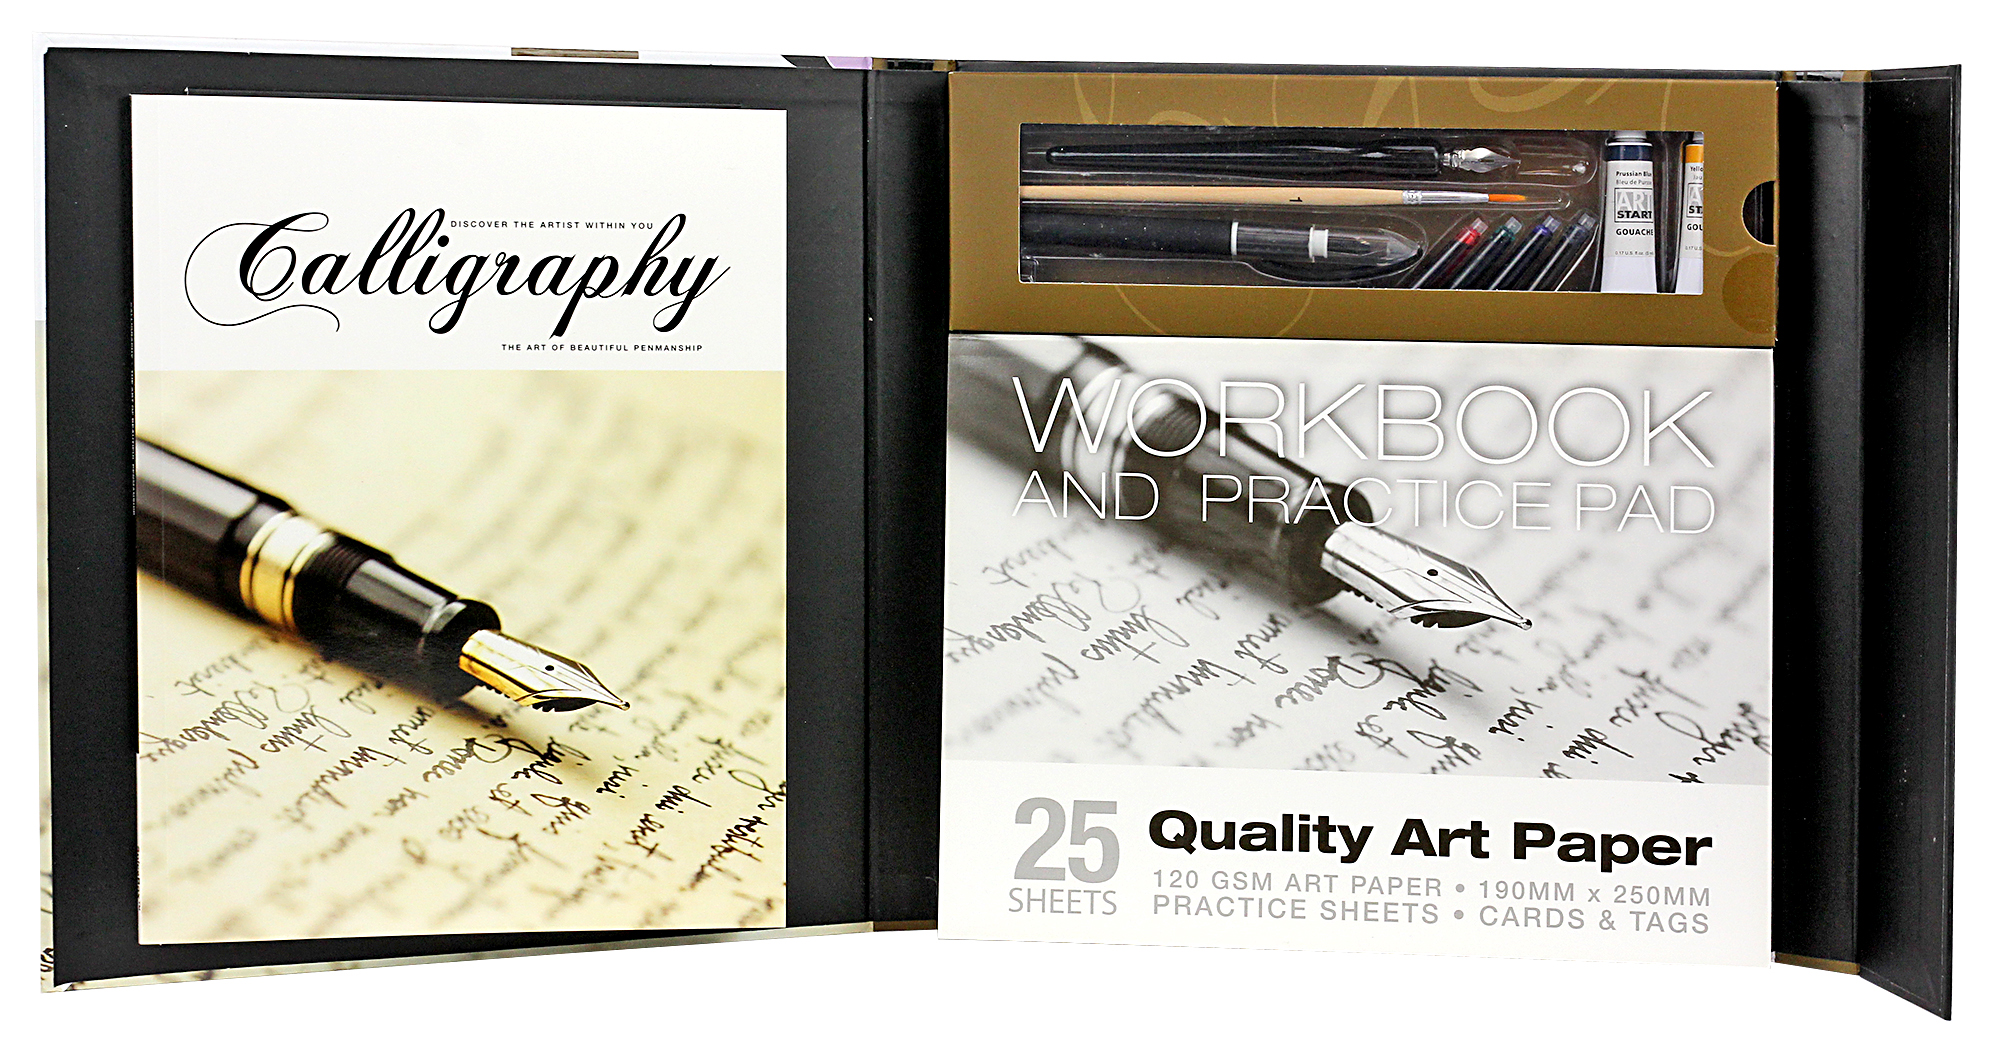 SpiceBox Adult Art Craft & Hobby Kits Art Studio Calligraphy 